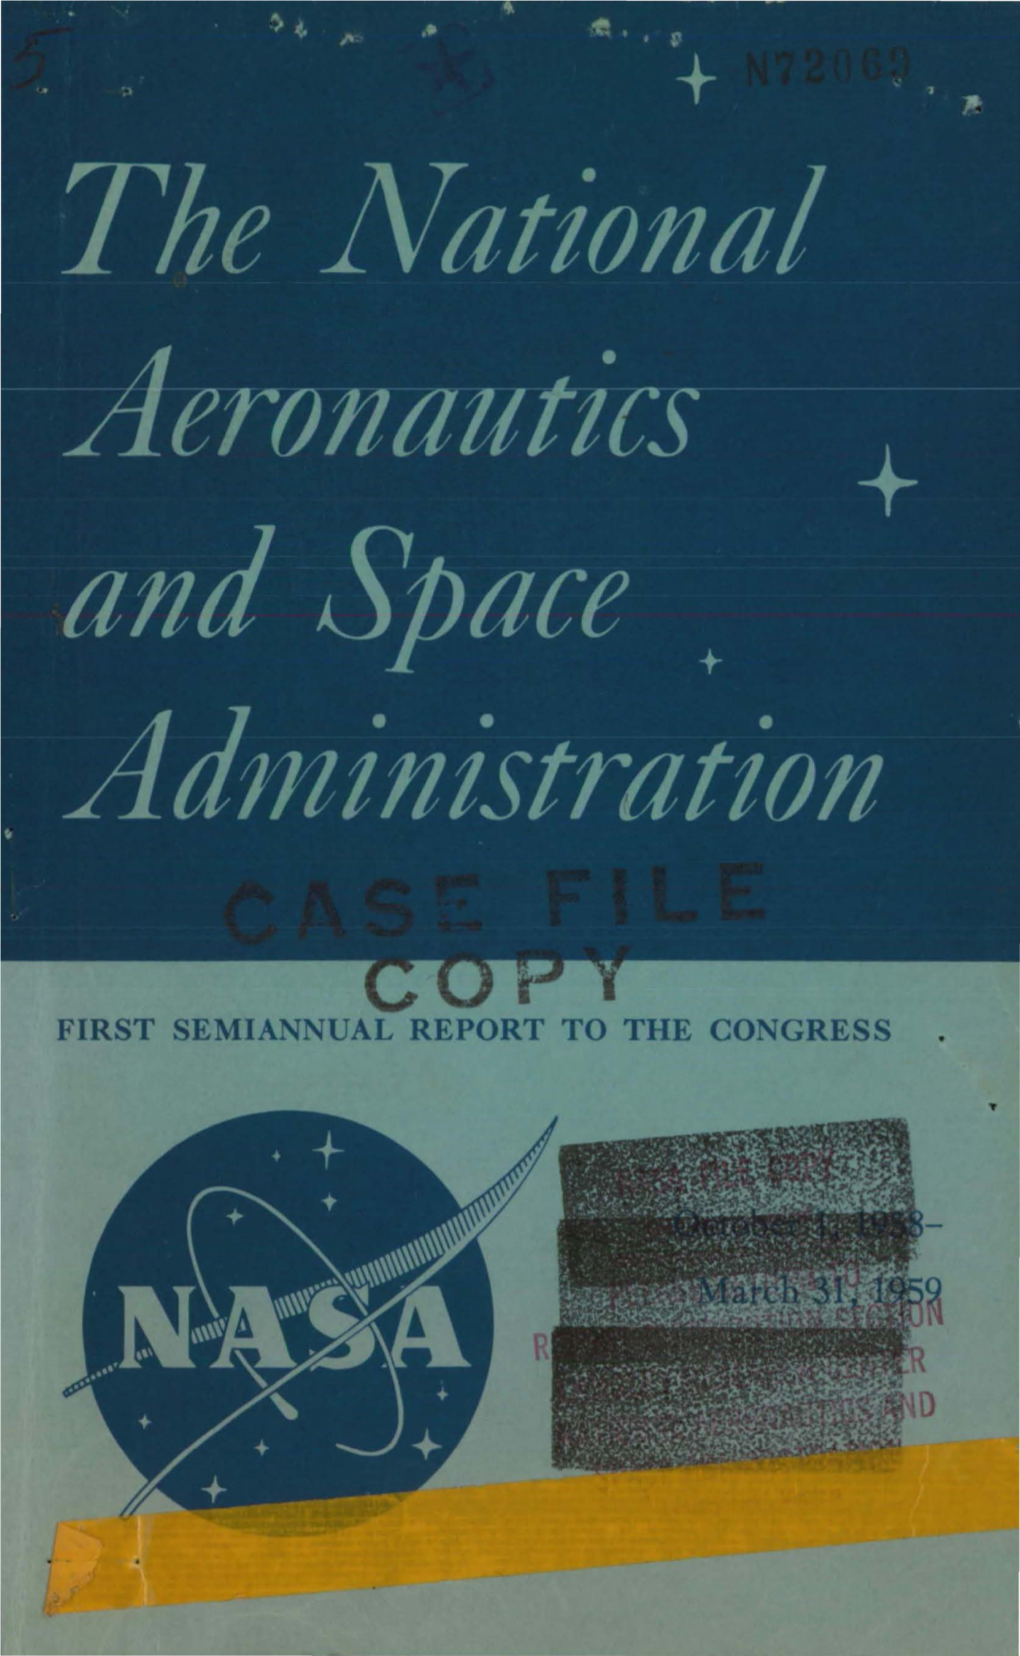 The National Aeronautics and Space' Administration